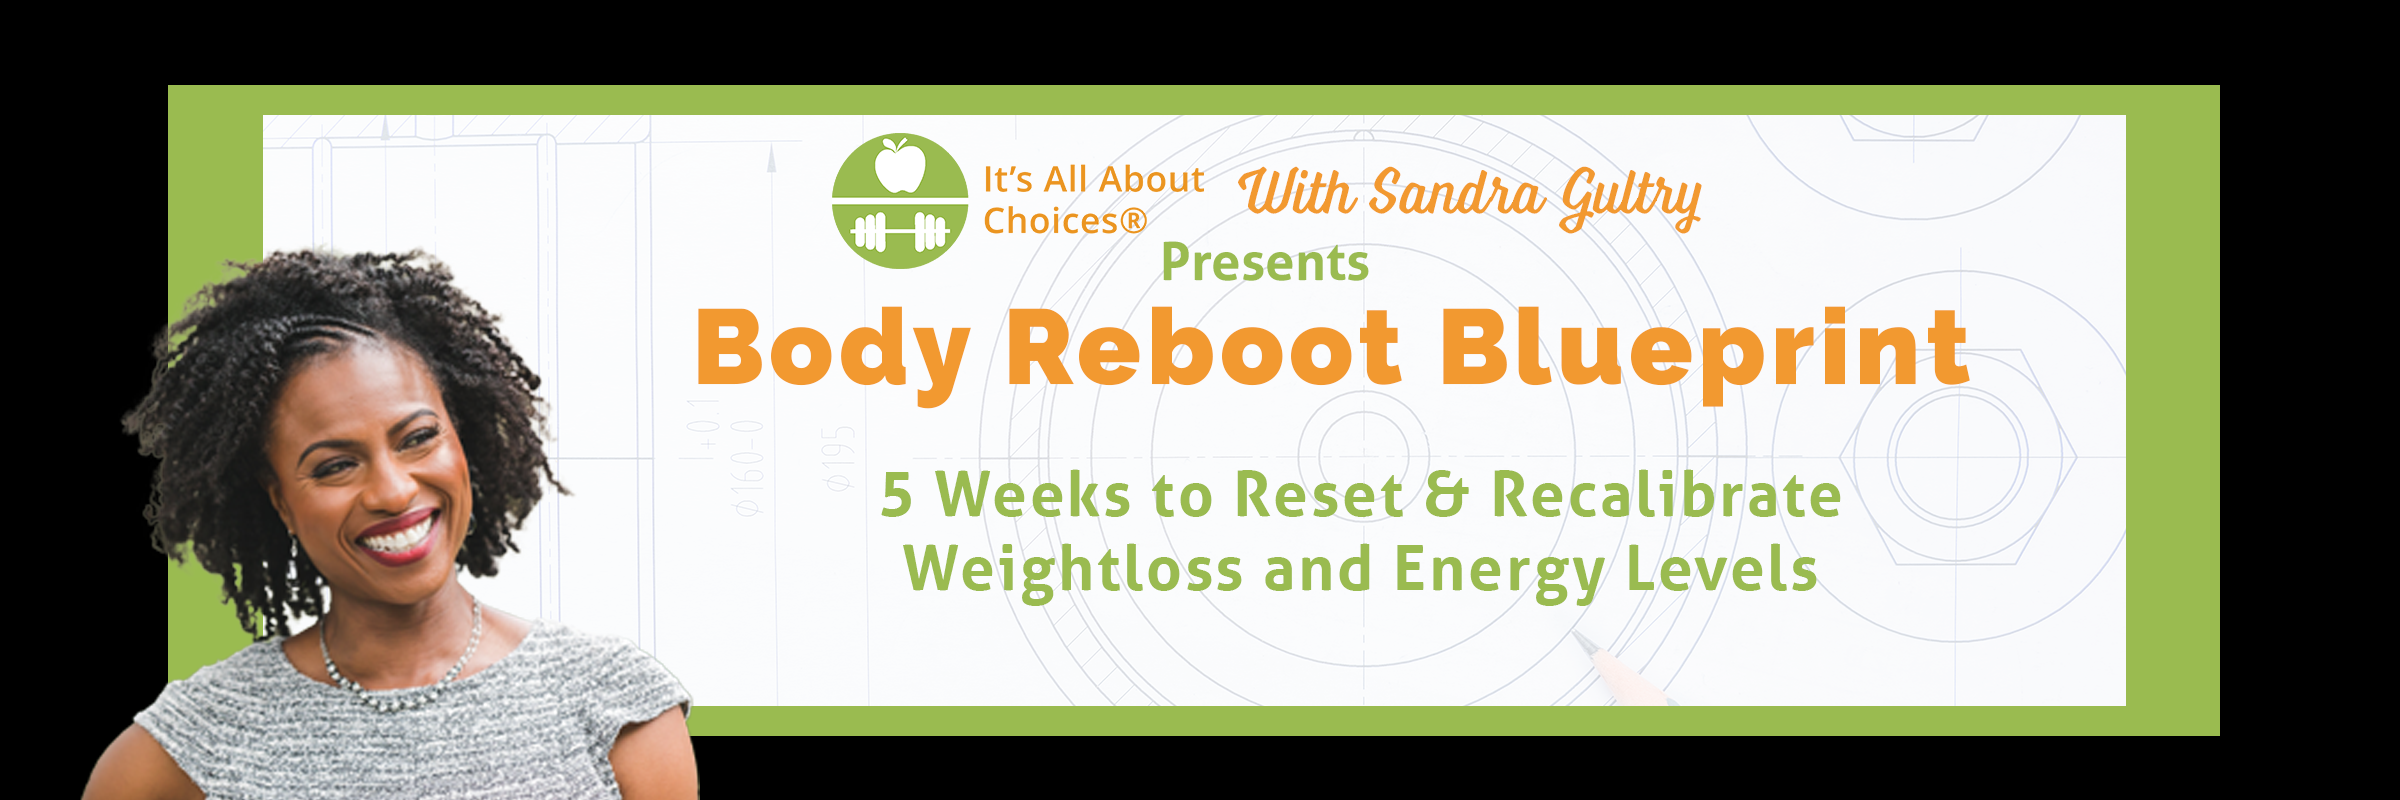 Body-Reboot-BlueprintMain-Banner